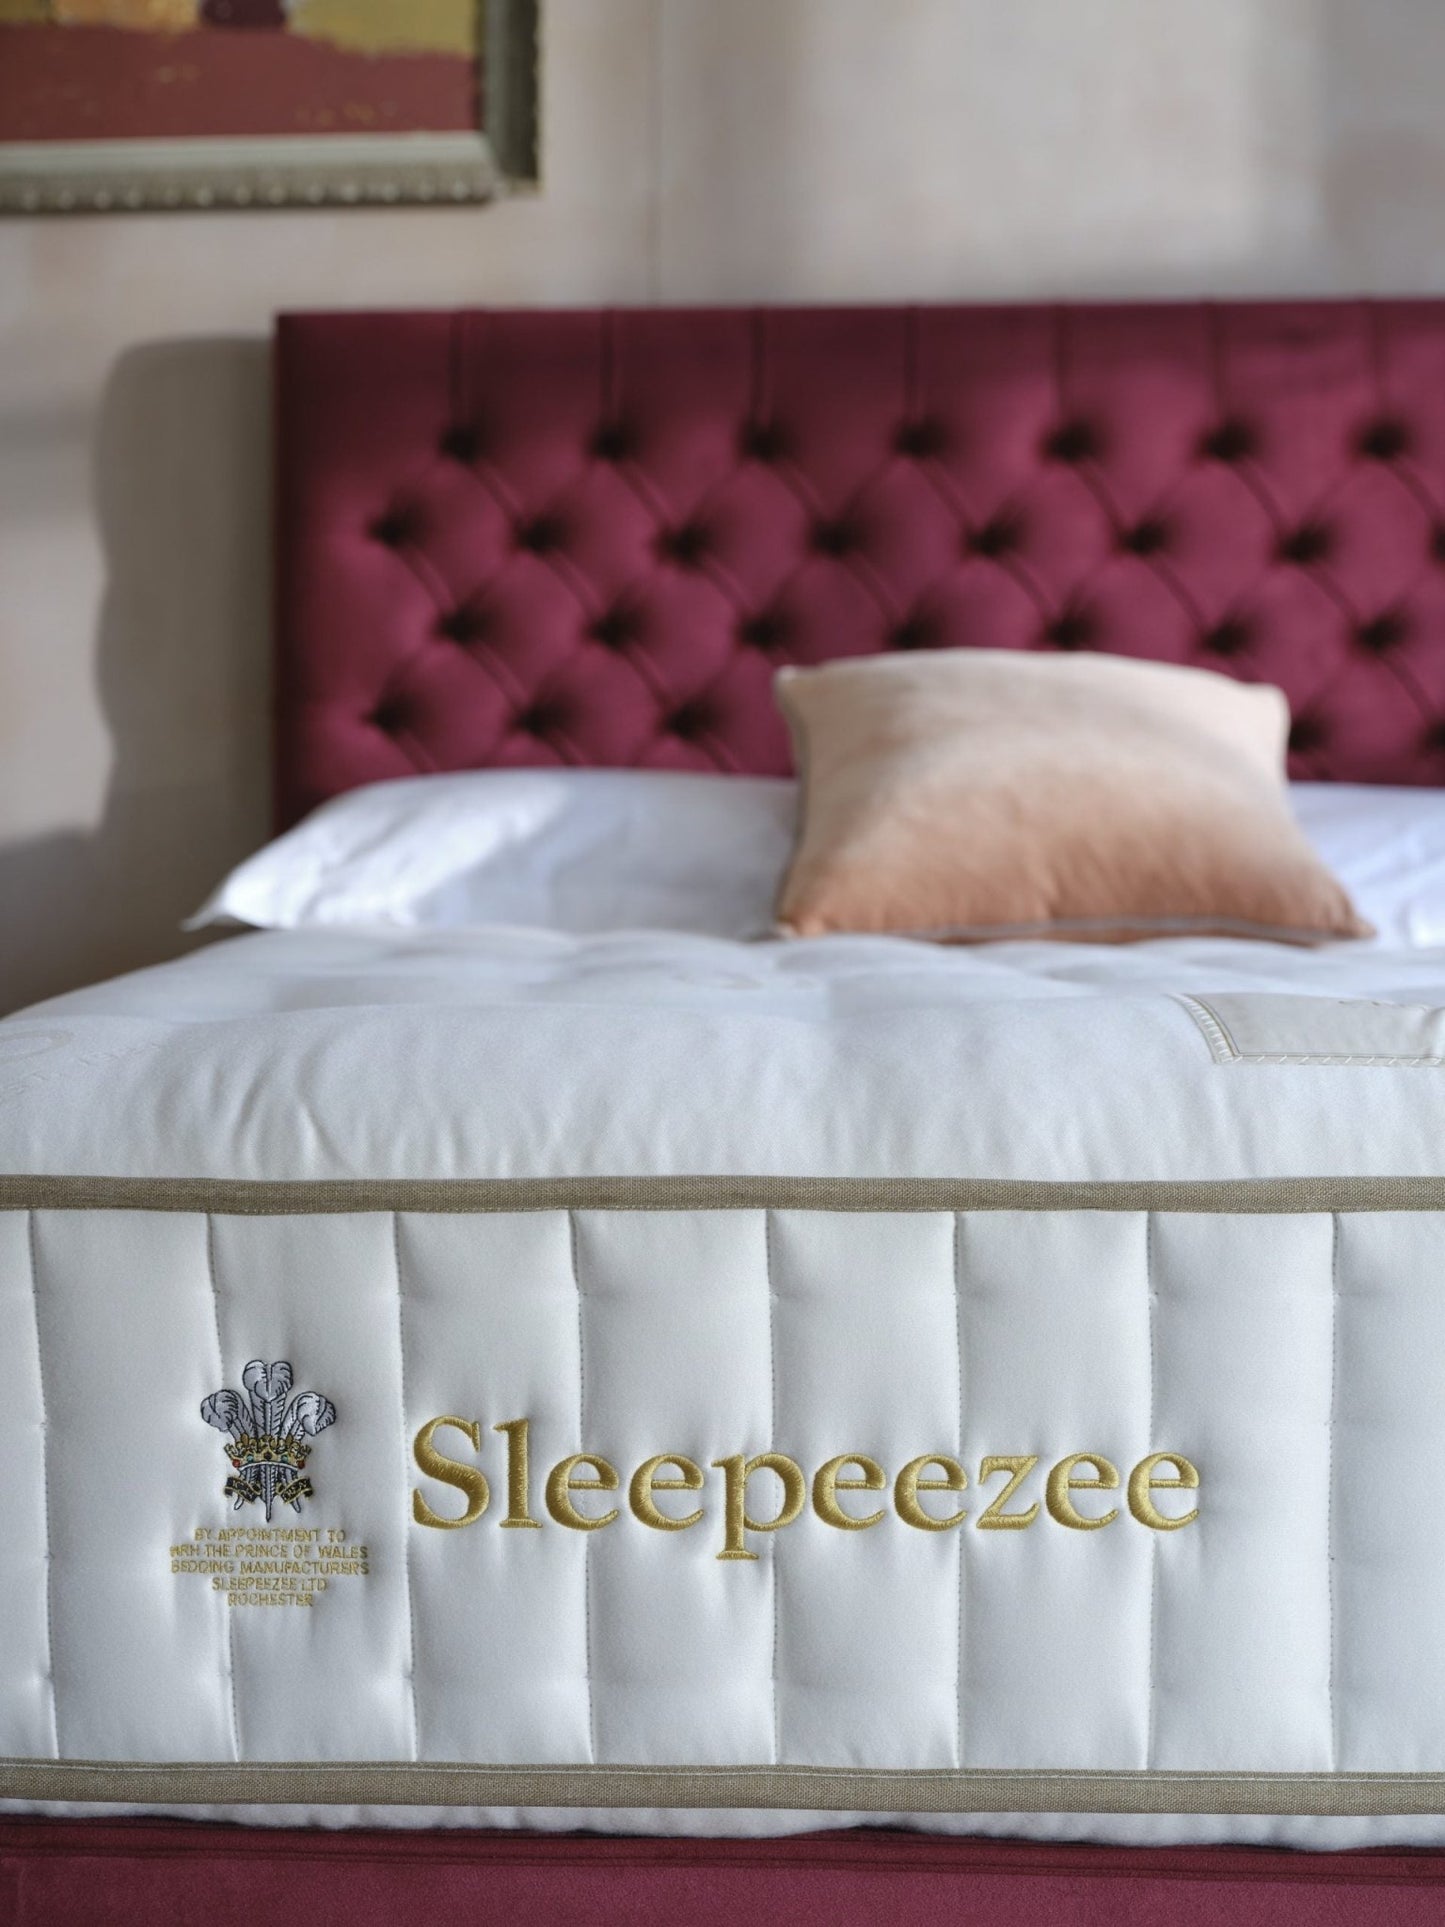 Sleepeezee Centurial 03 - Cenurial collection - TV Beds Northwest - doublemattress - kingmattress